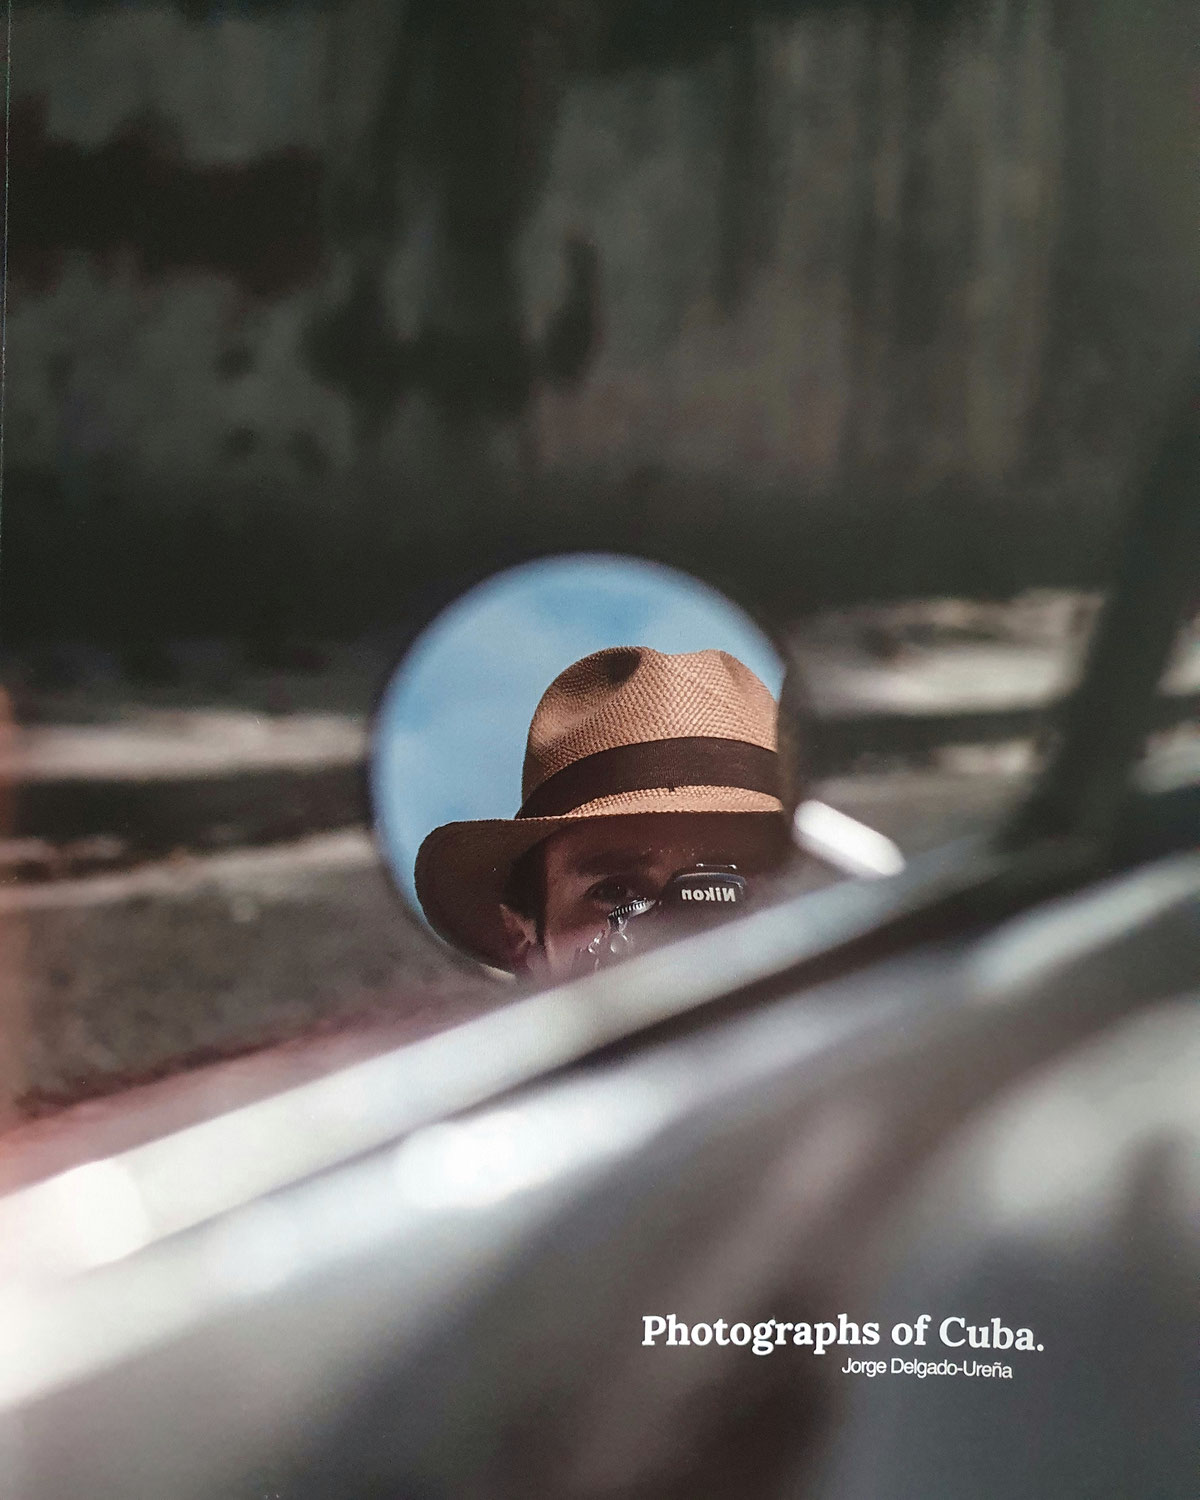 Podcast Folge 80 - Schmökerkiste - Photographs of Cuba, von Jorge Delgado-Ureña